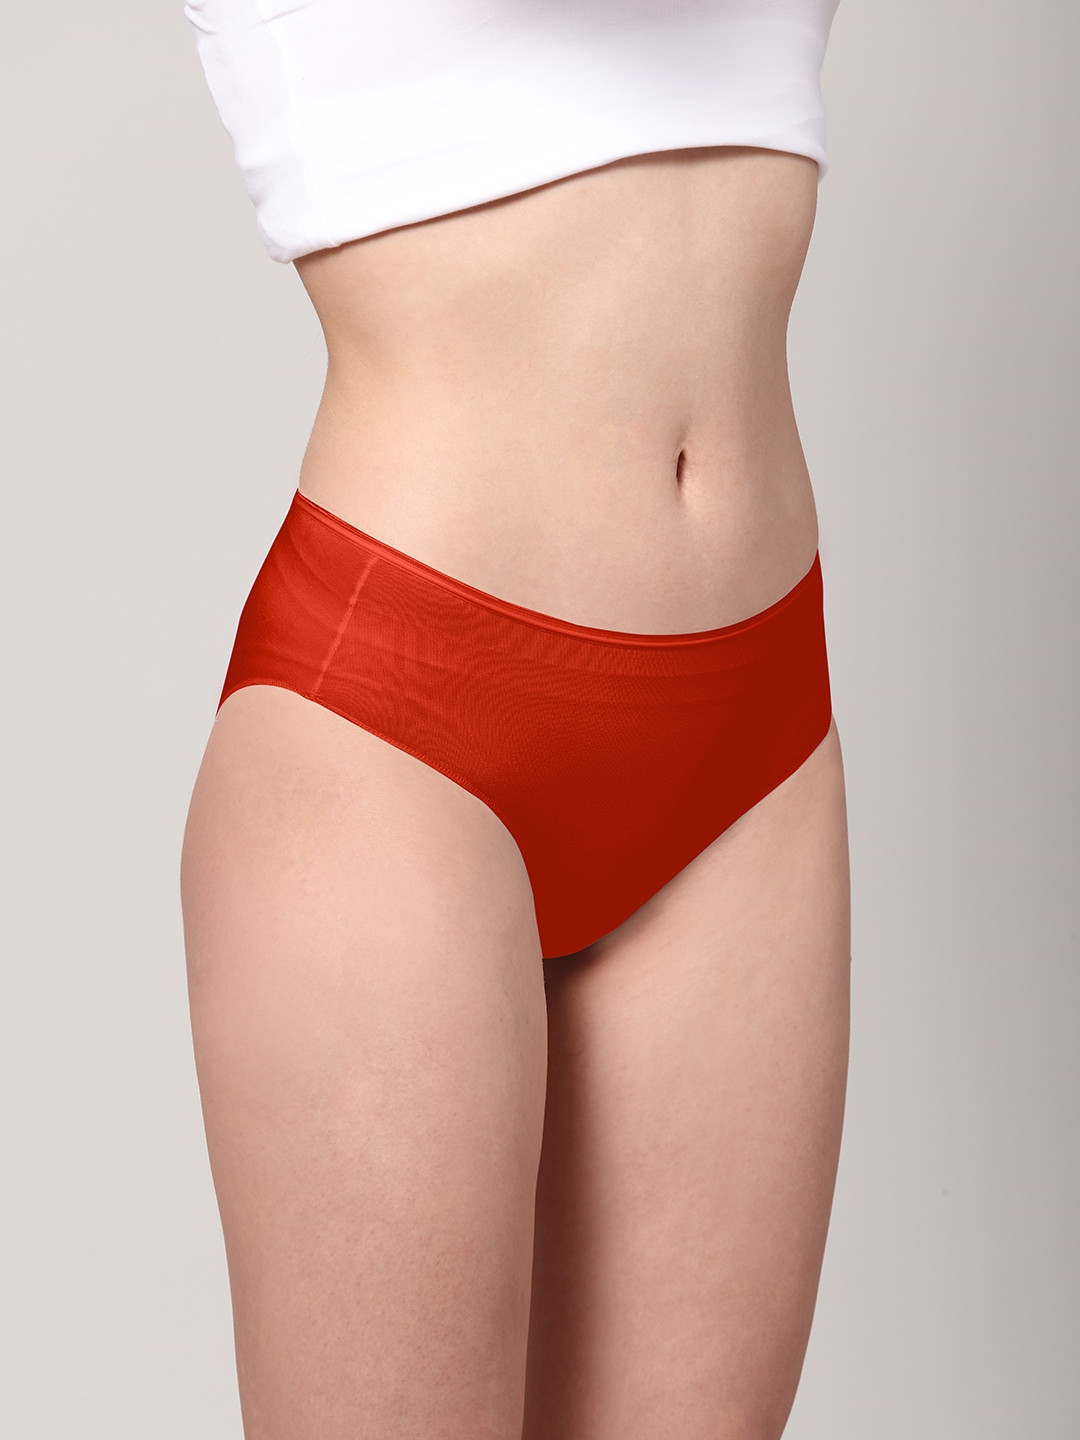 AshleyandAlvis | AshleyandAlvis Women's Panties Micro Modal, Anti Bacterial, Skinny Soft, Premium Hipster  -No Itching, Sweat Proof, Double In-seam Gusset 2